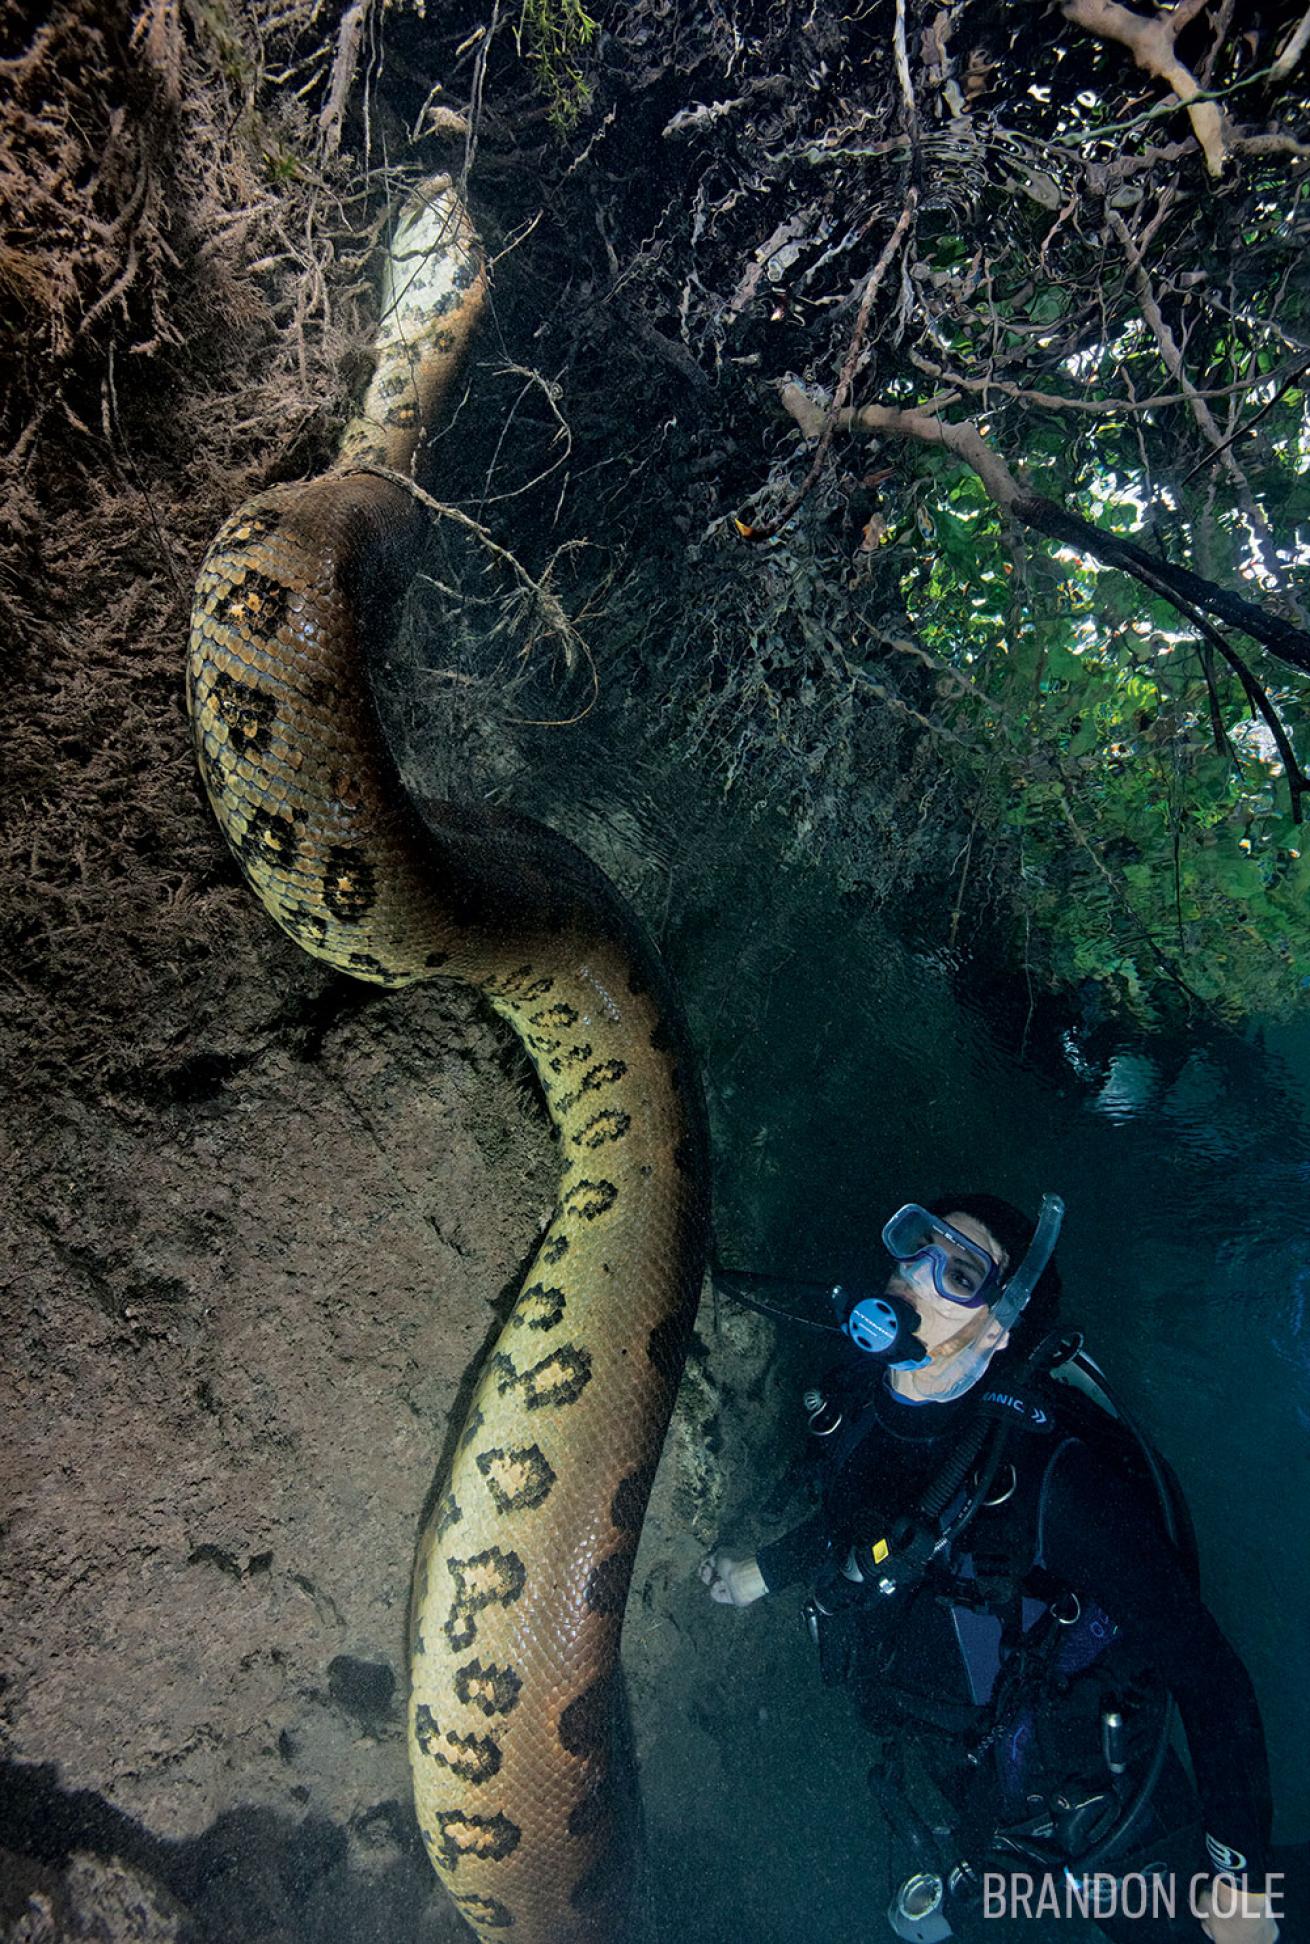 Diver next to 23-foot anaconda in the Amazon River, Brazil